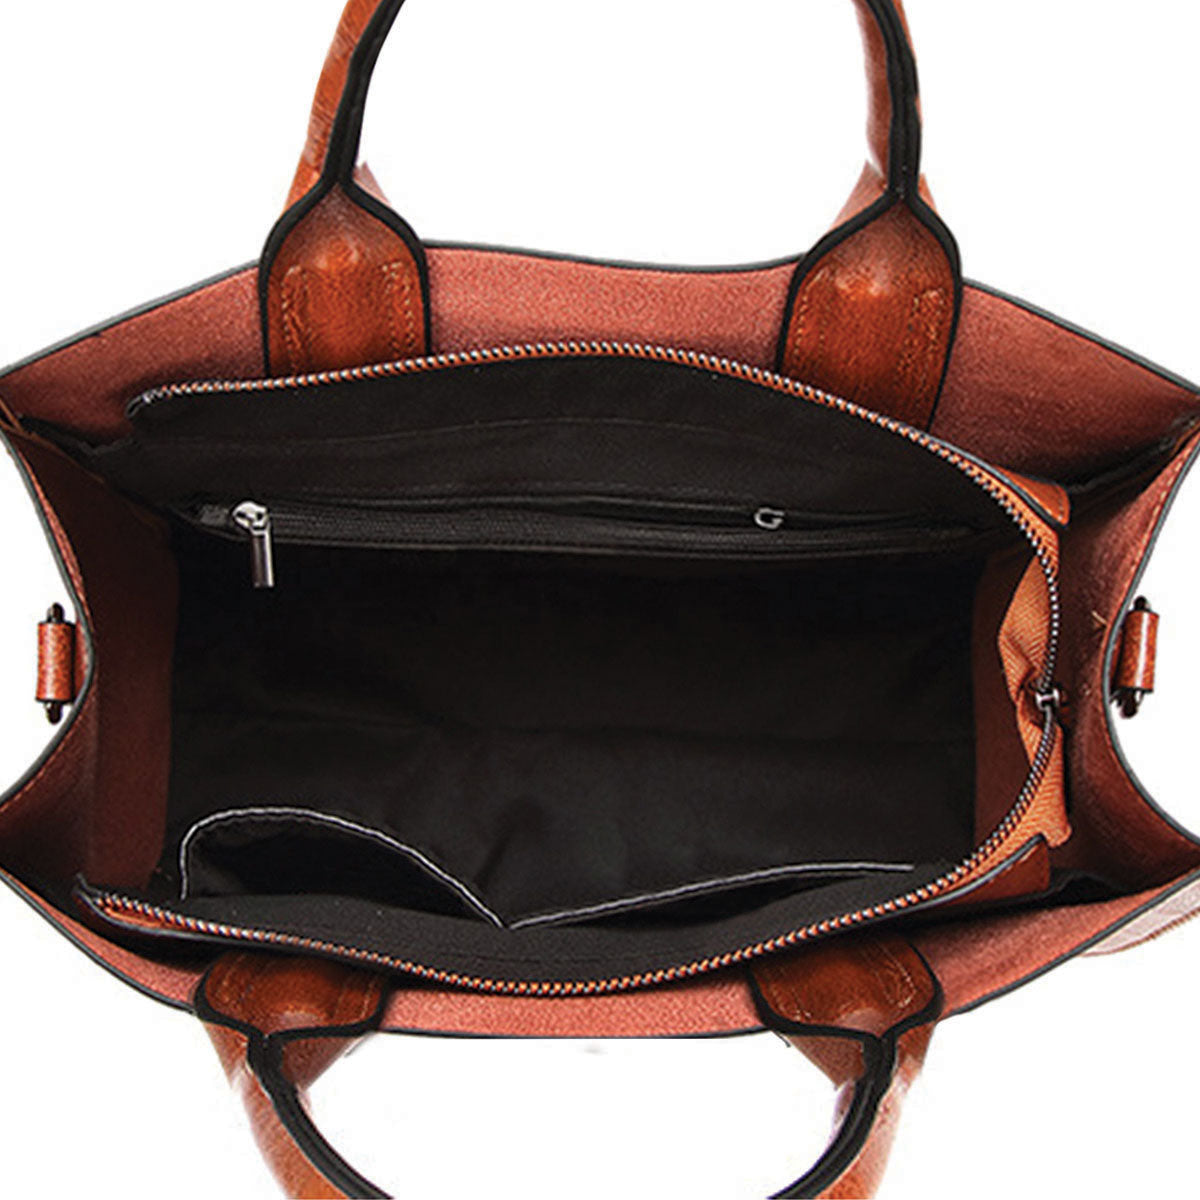 Your Best Companion - Pomeranian Luxury Handbag V1